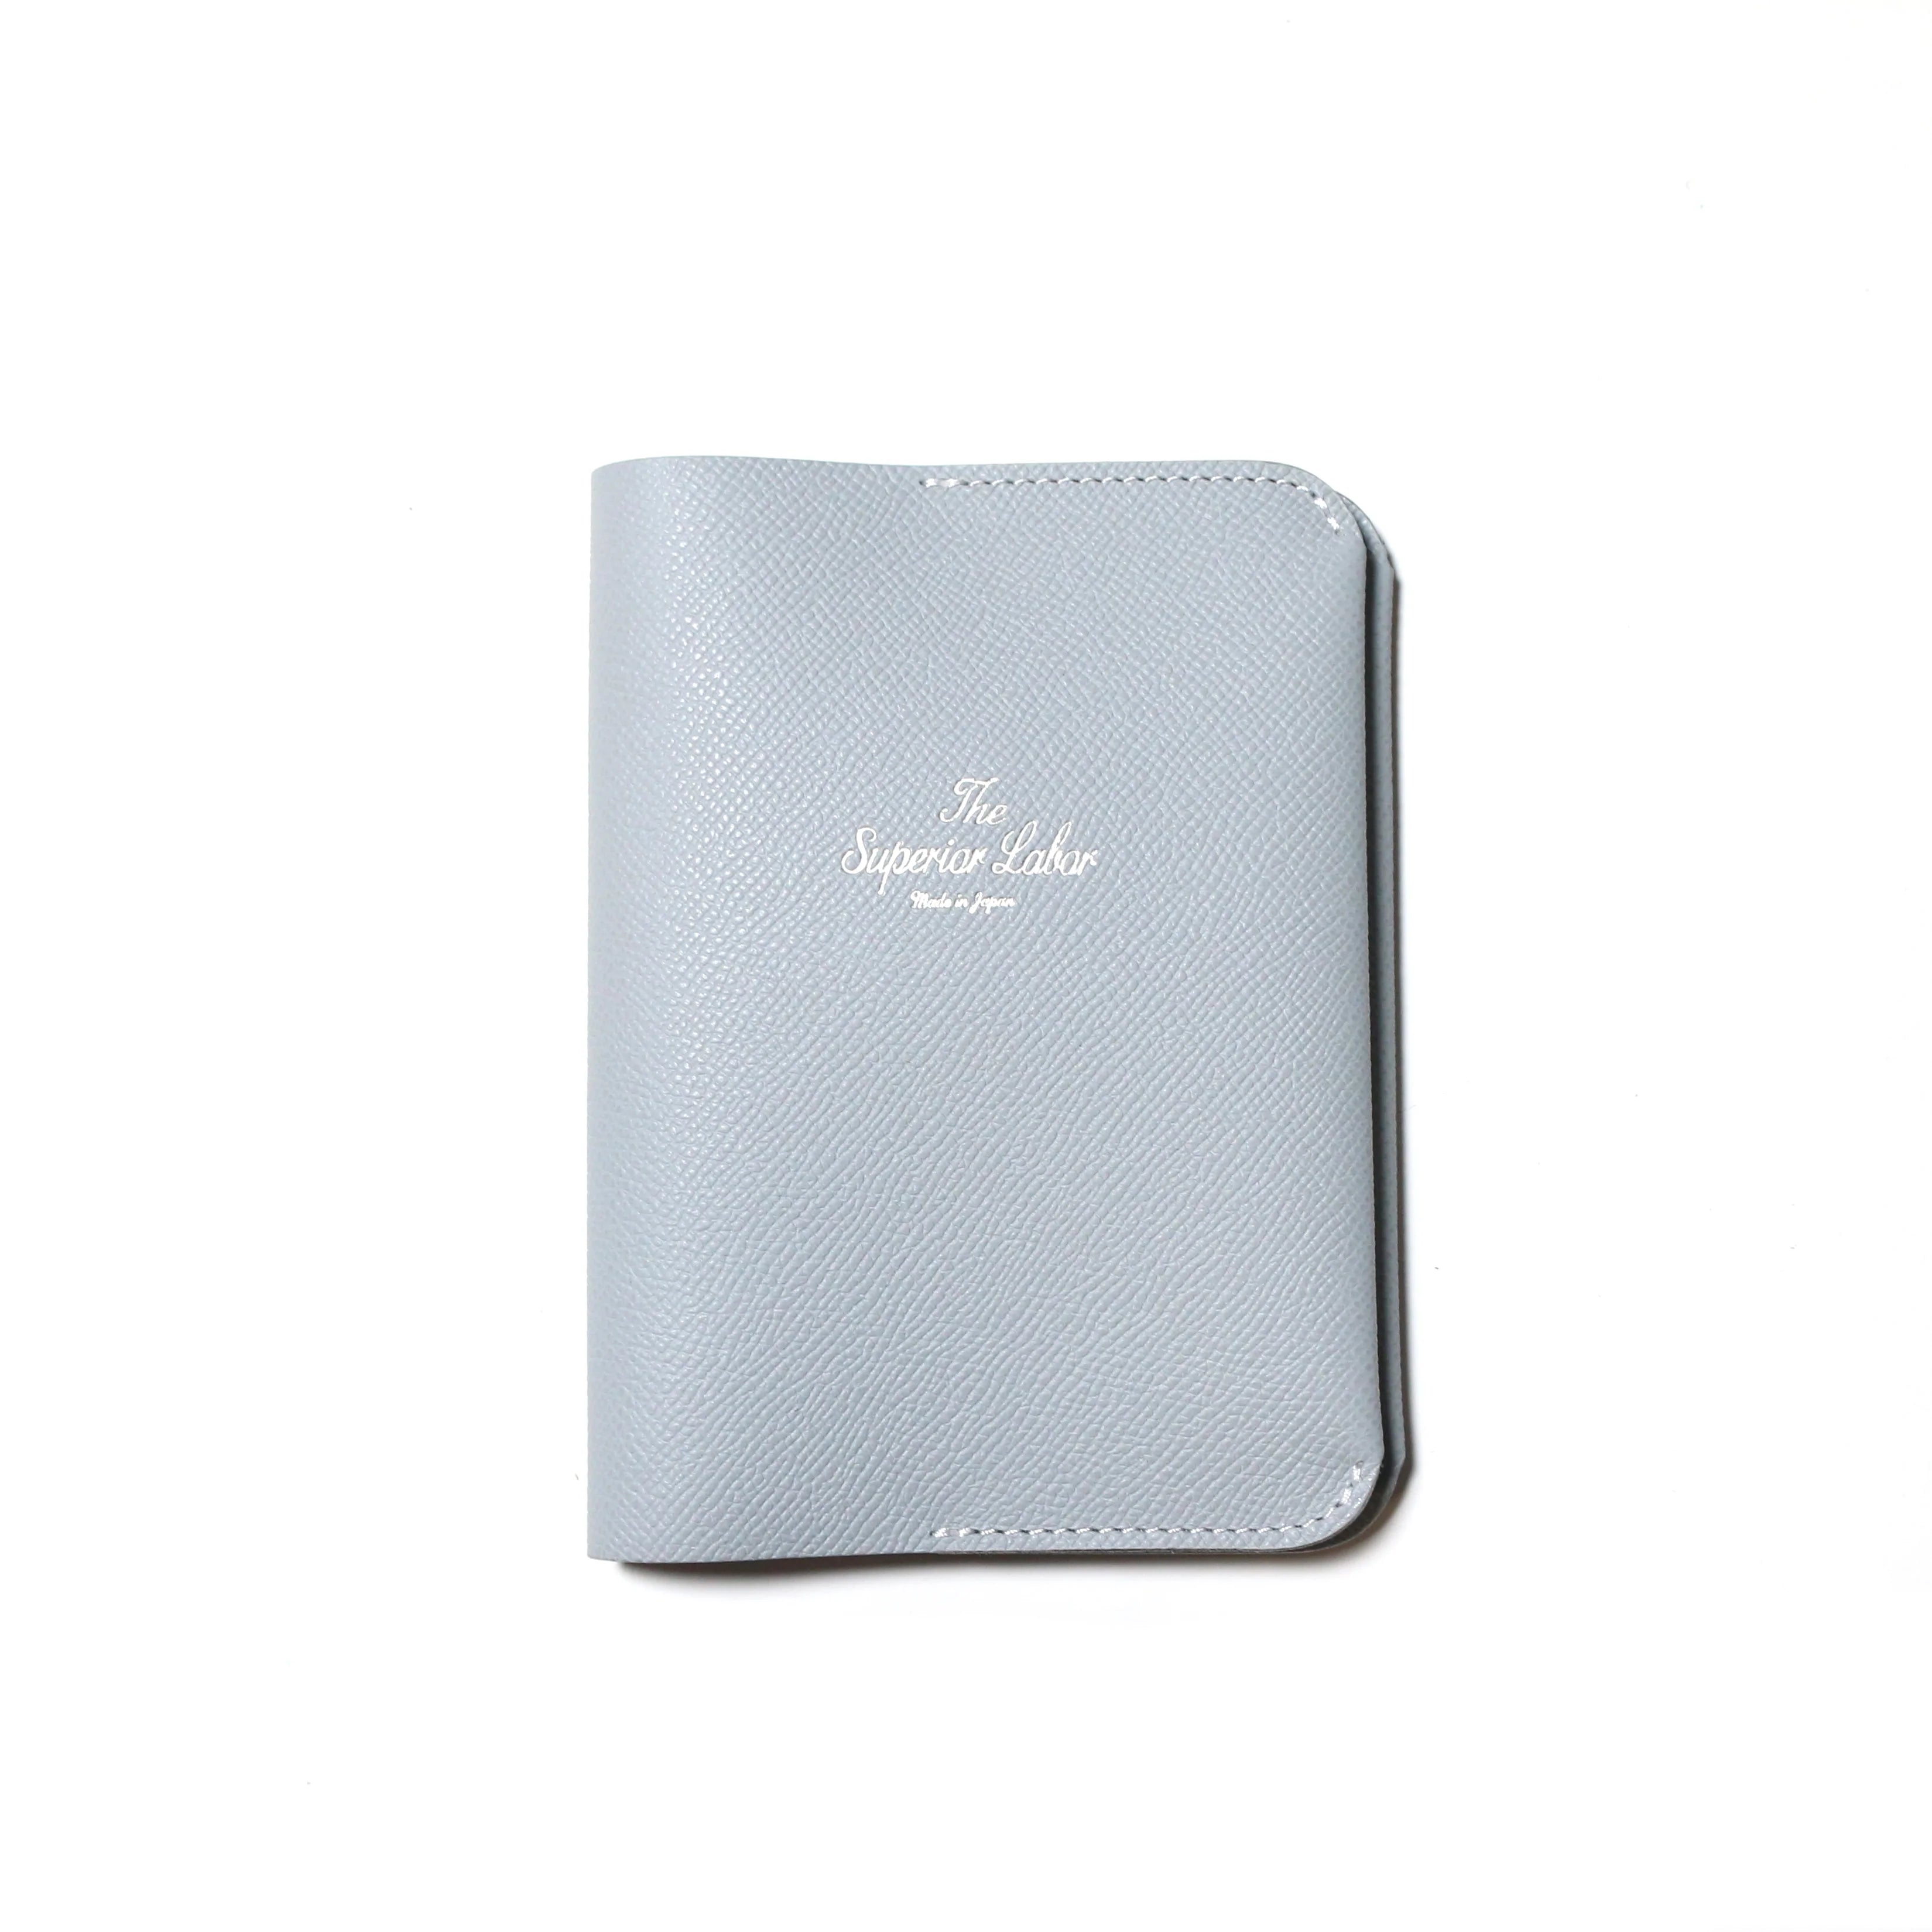 SL0817 Calf A6size Notebook Cover